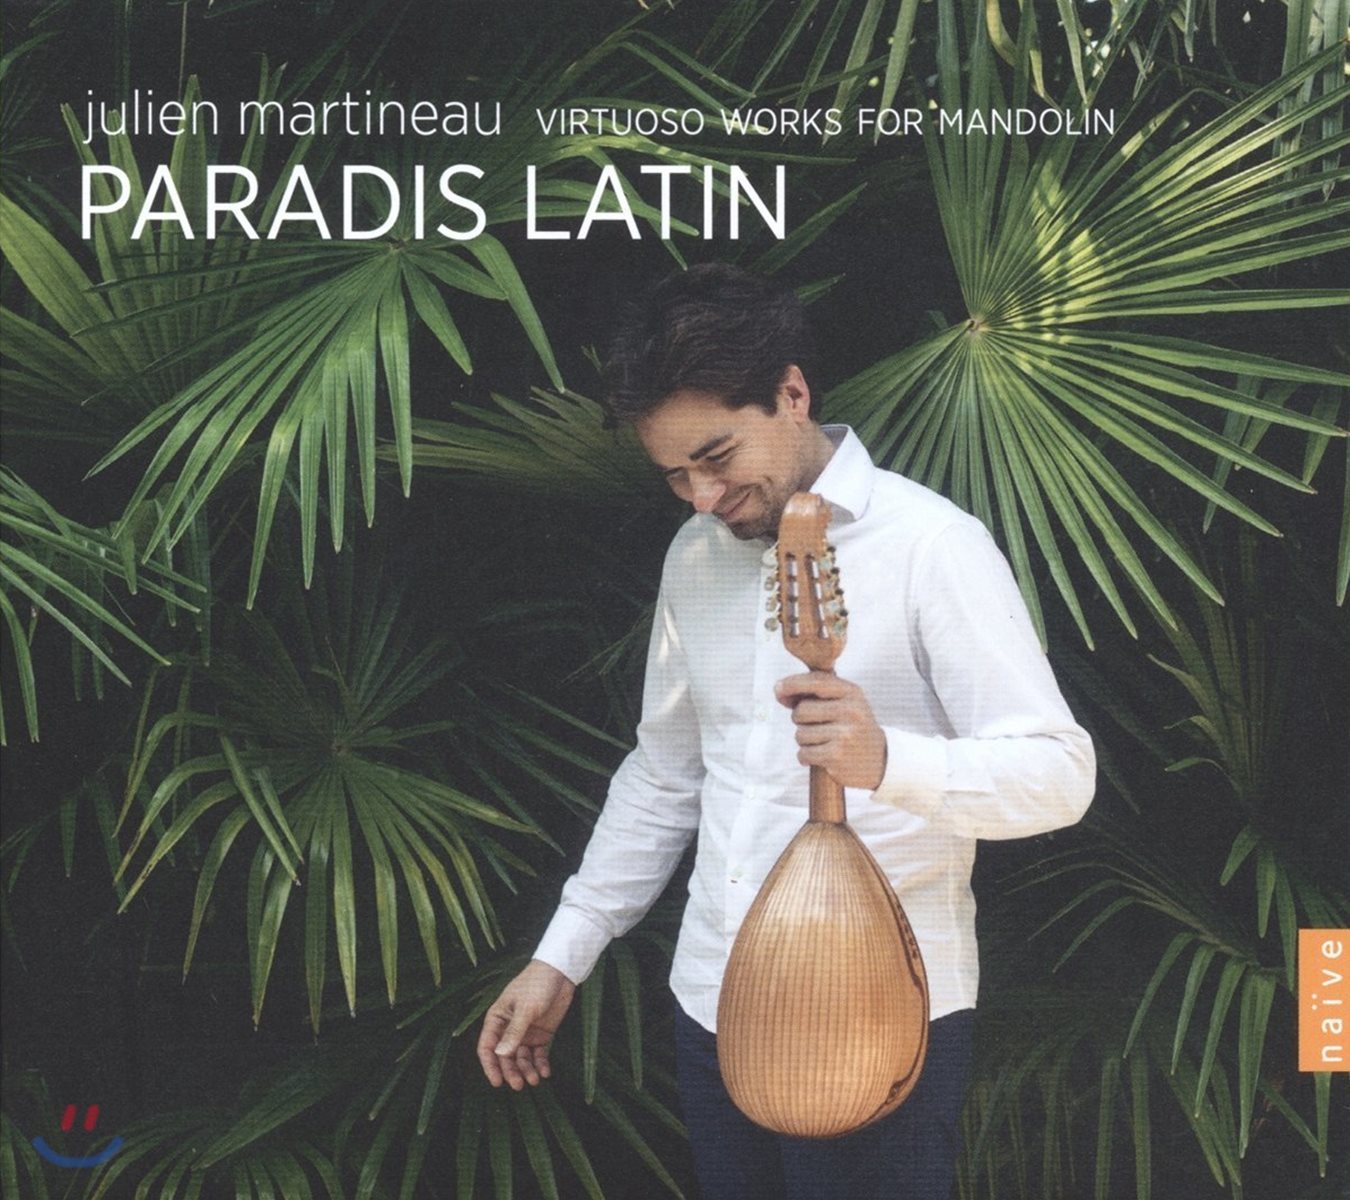 Julien Martineau 파라다이스 라틴 - 만돌린 작품집 (Paradis Latin - Virtuoso Works for Mandolin)